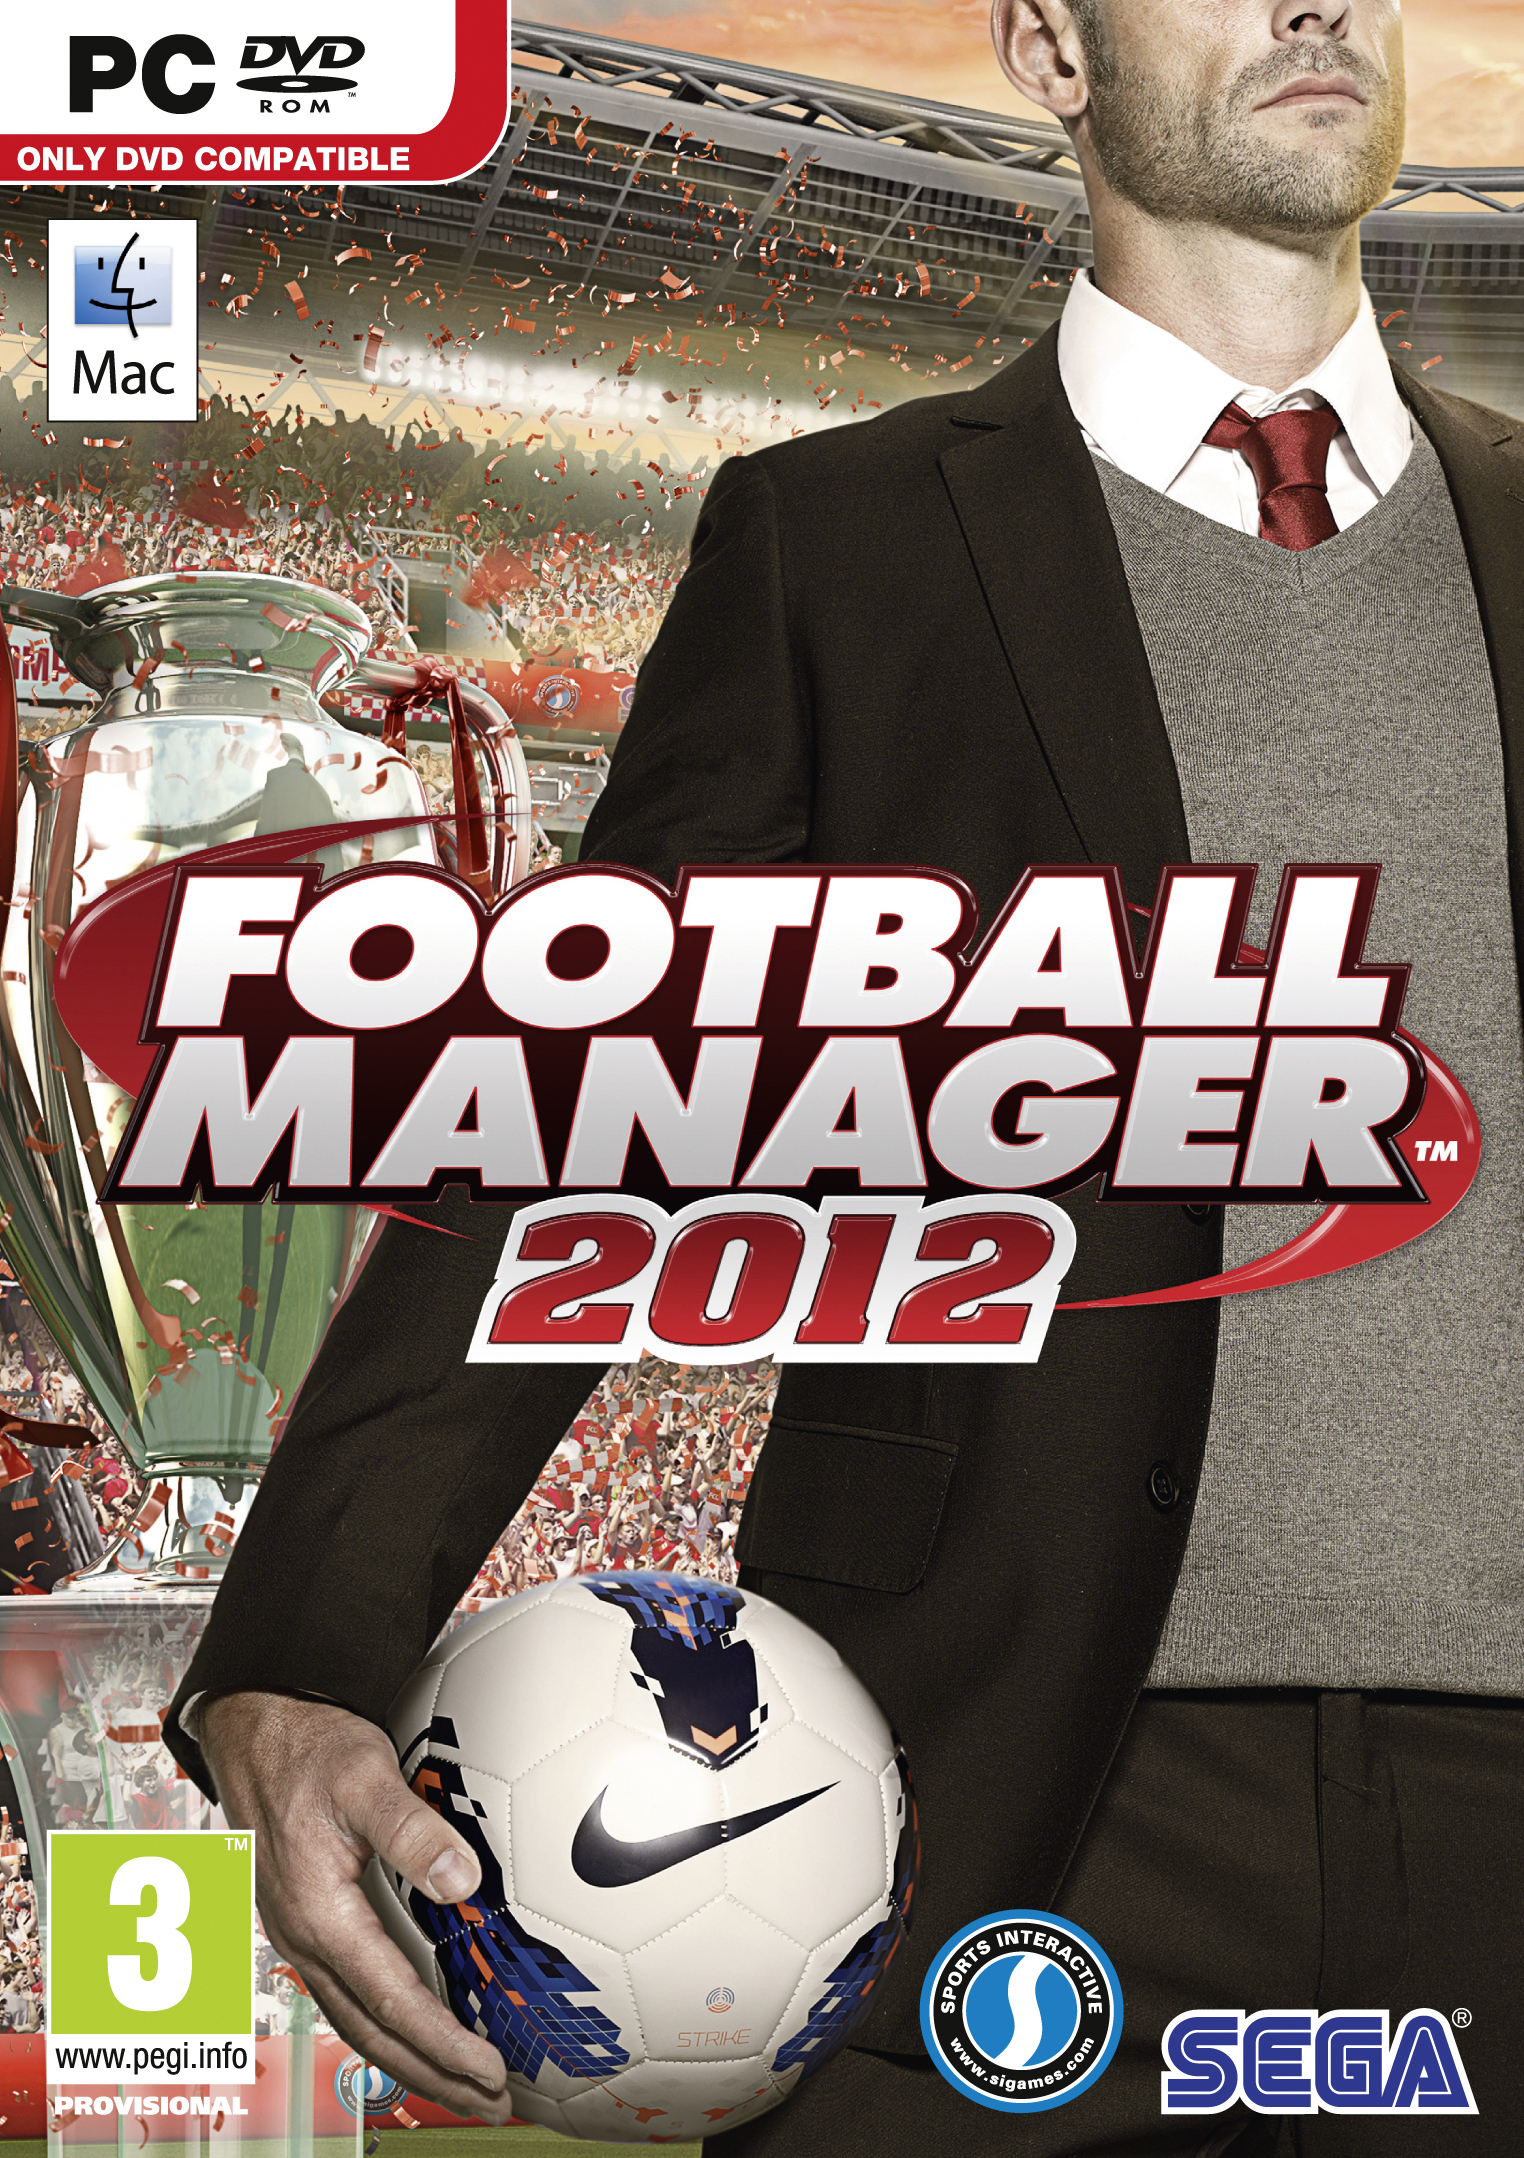 Football Manager, Dator, Fotboll, Premier League, Samuel Armenteros, Spel